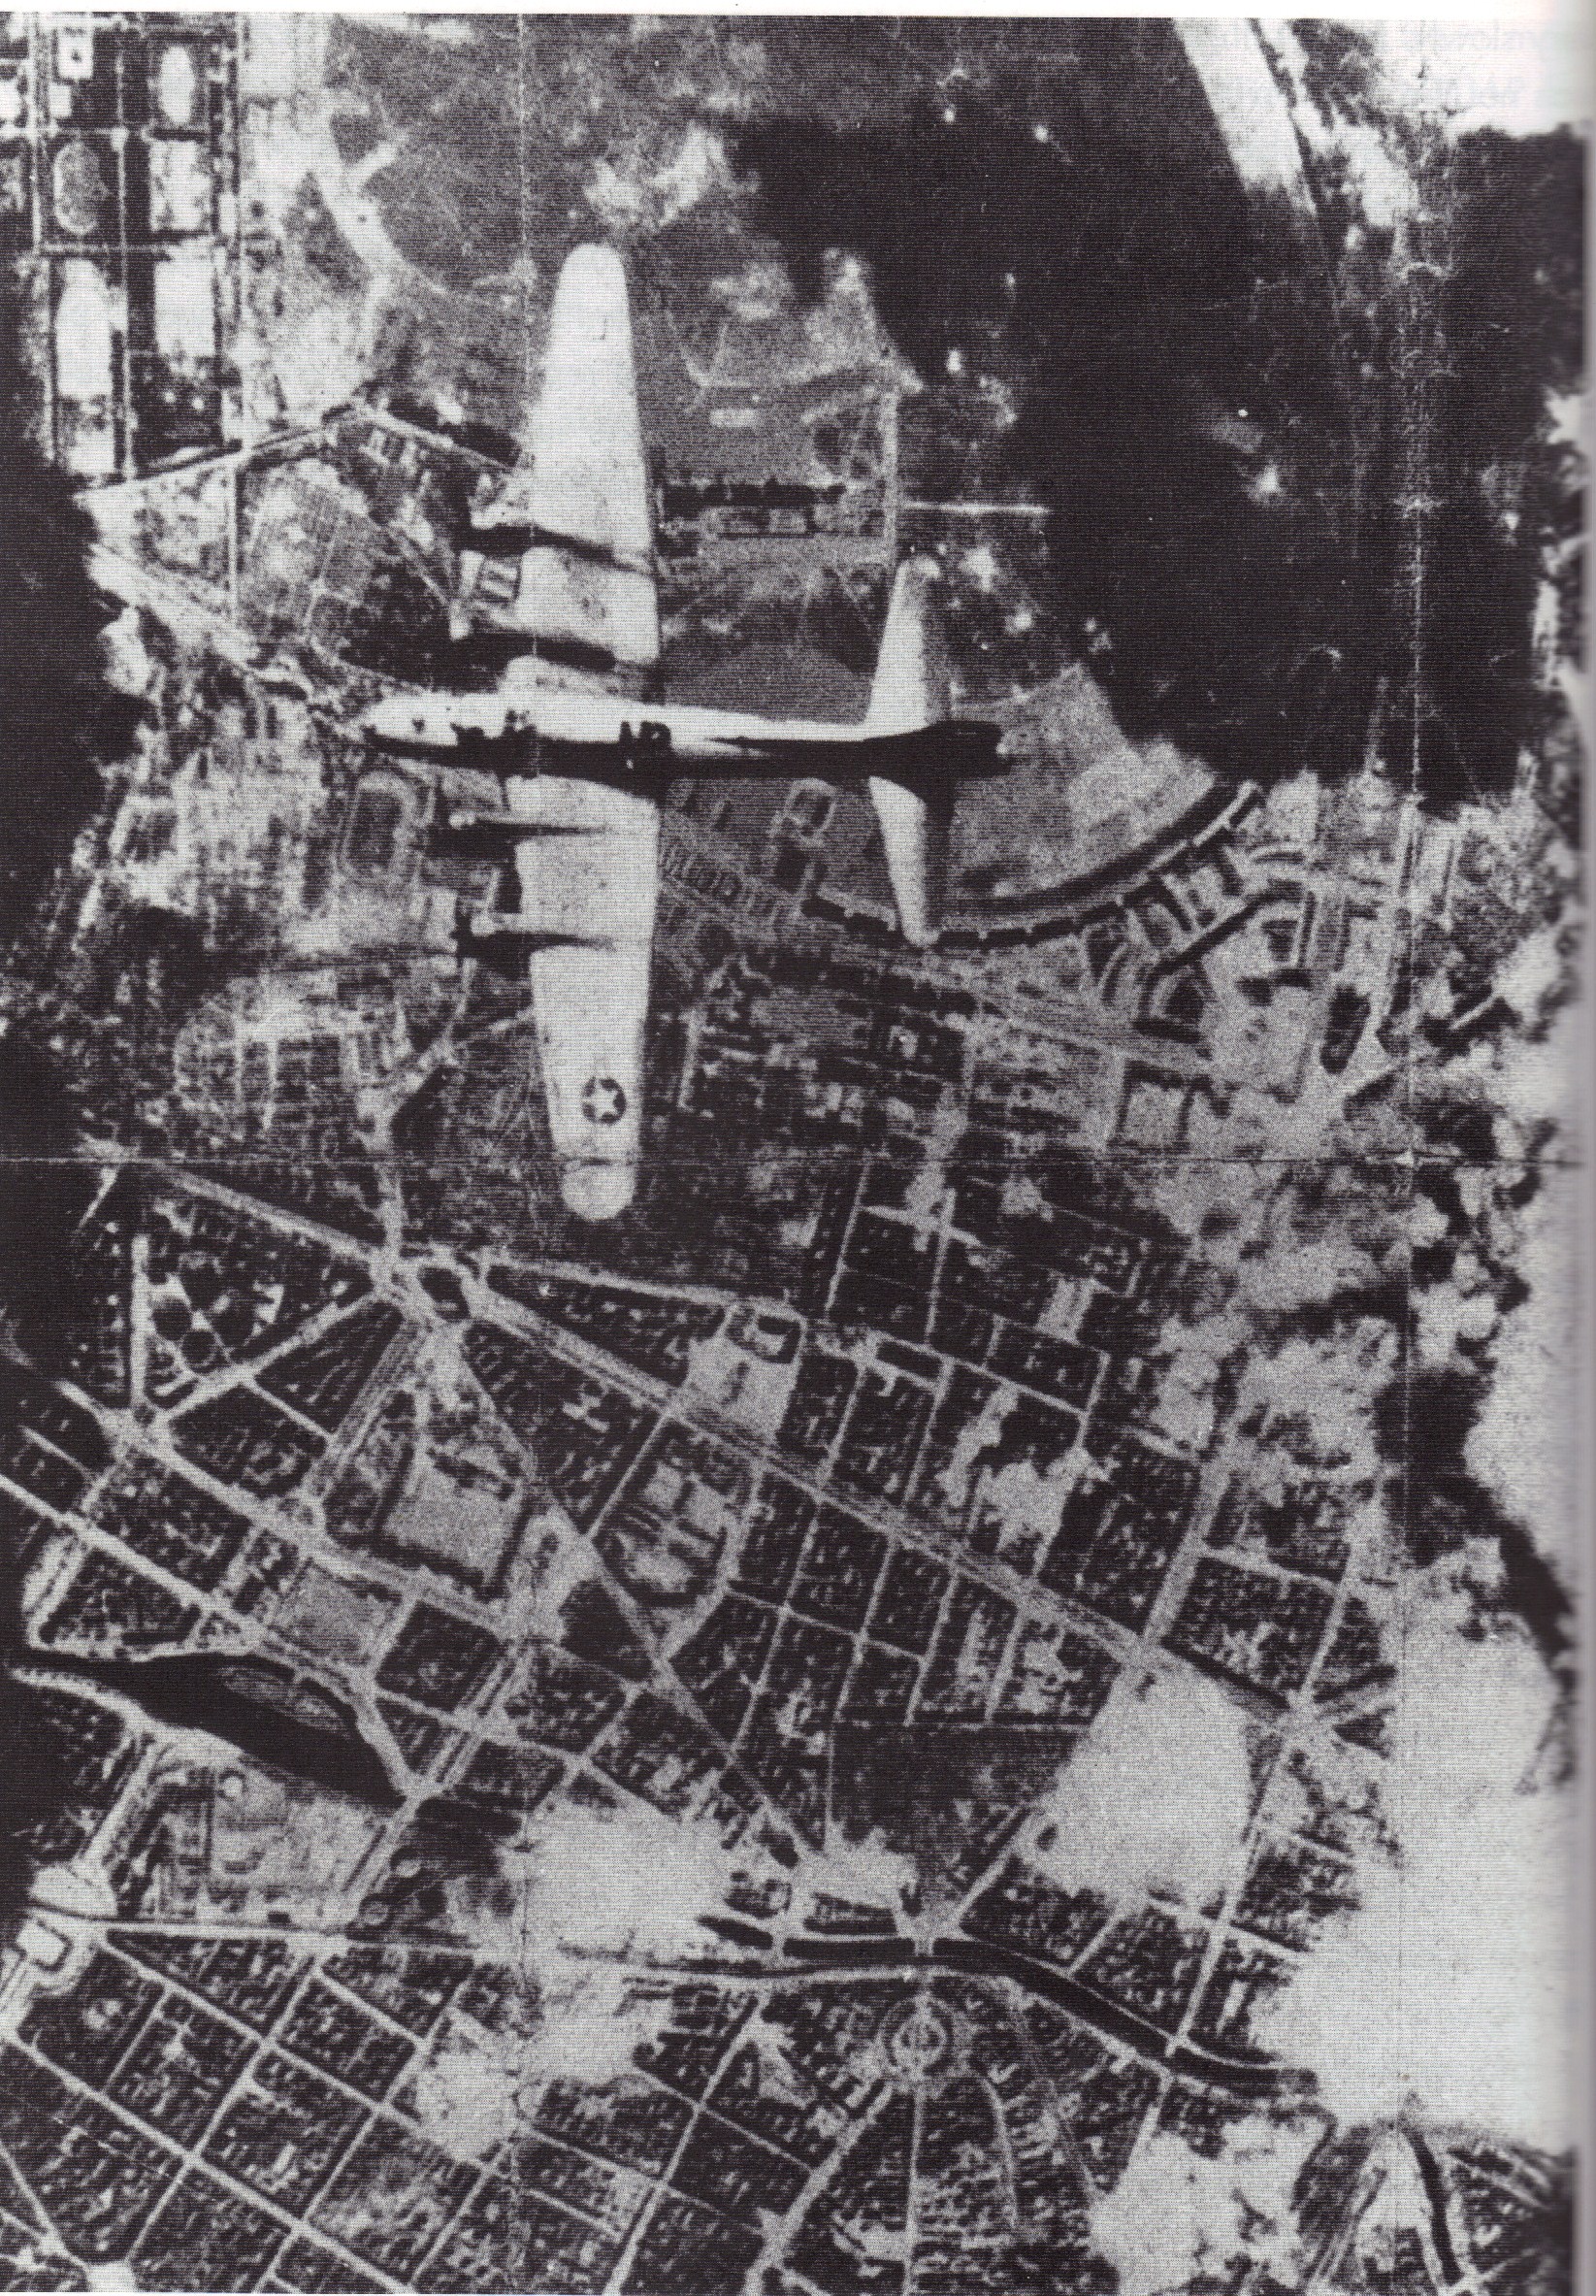 b-17-over-berlin-1945.jpg